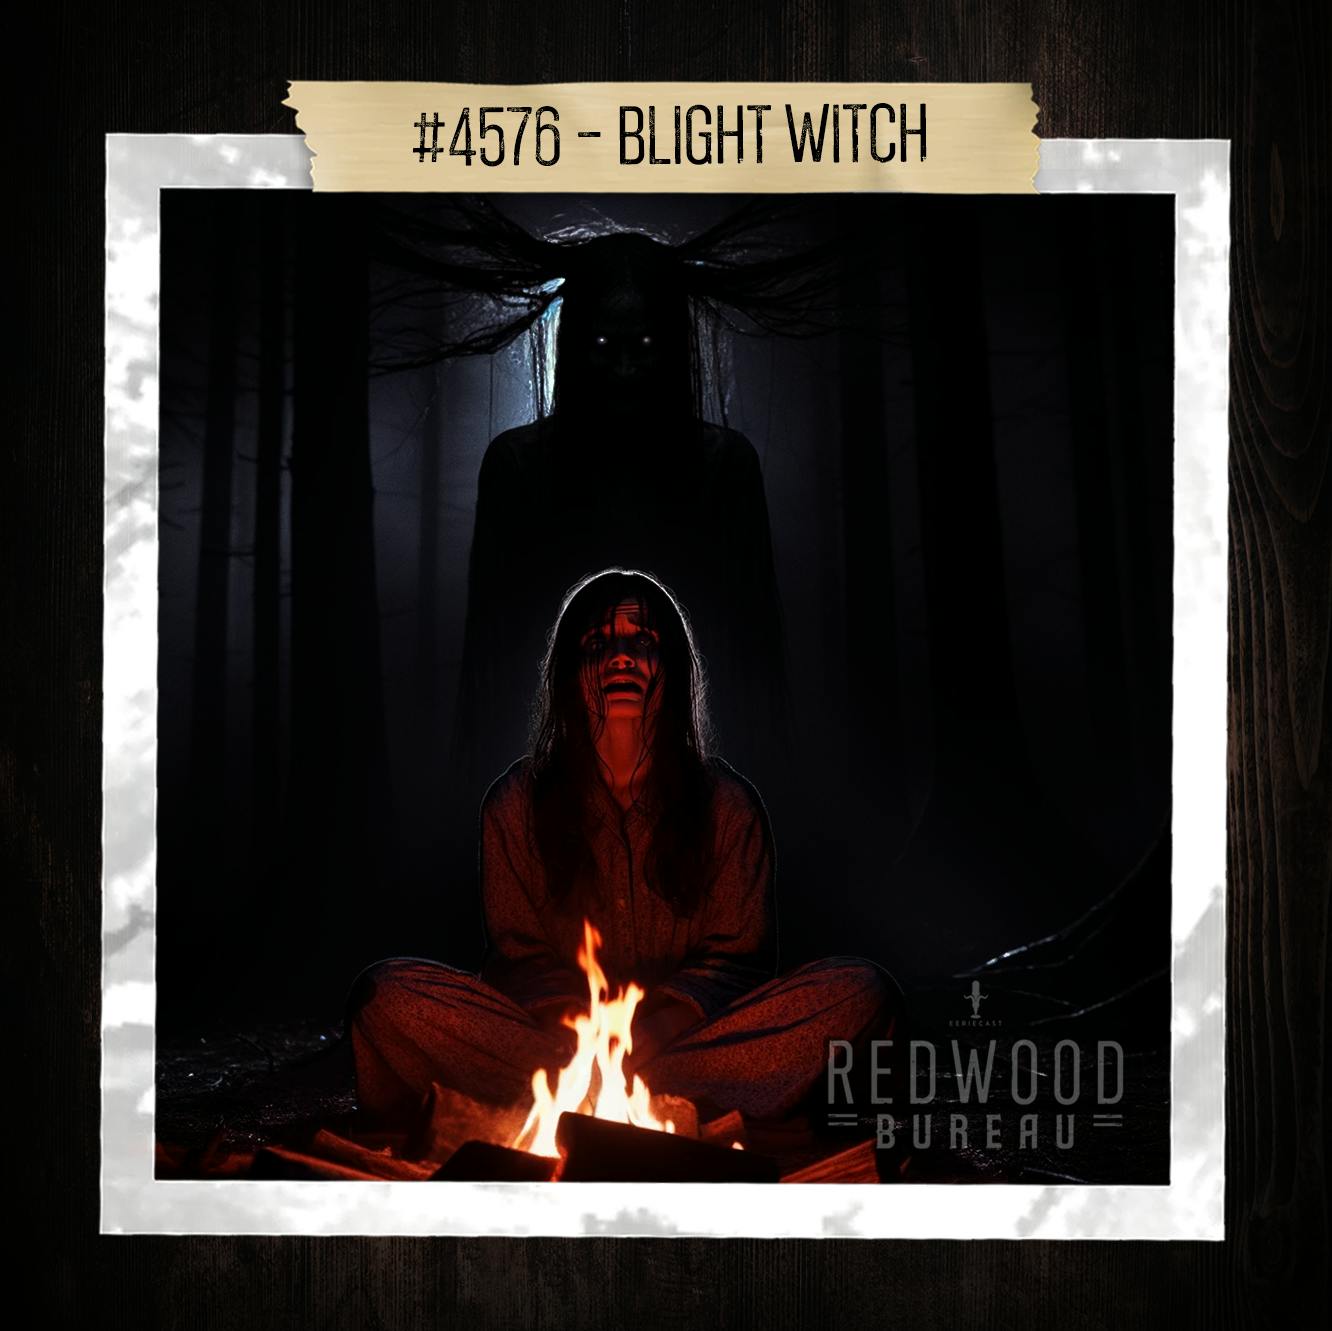 ”BLIGHT WITCH” - Redwood Bureau Phenomenon #4576